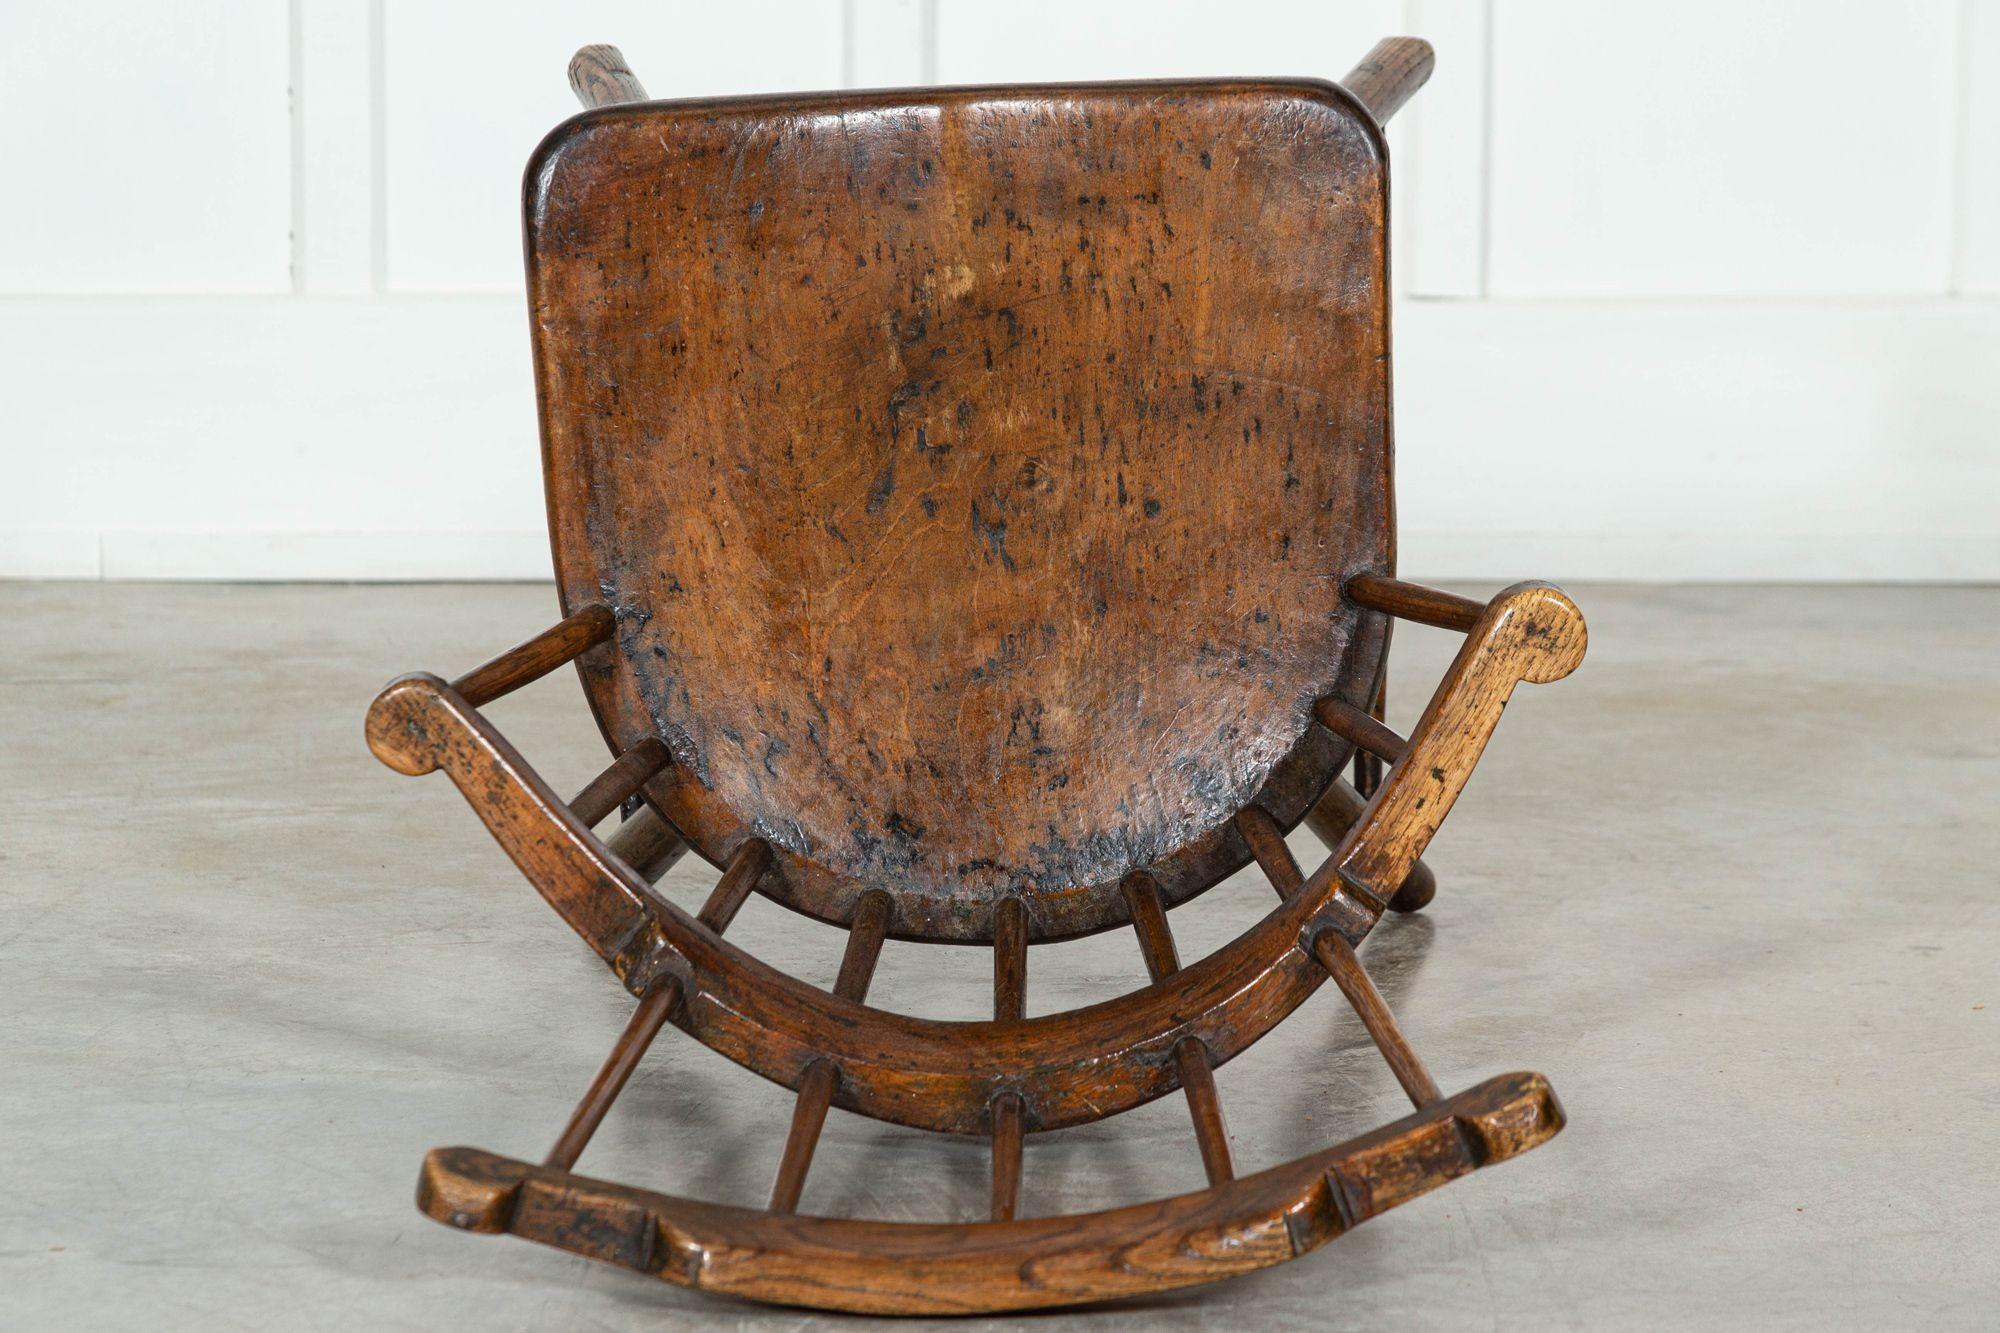 circa 1750
English 18thC Vernacular Elm & Ash Comb-Back Windsor Chair
sku 1505
W57 x D43 x H90 cm
Seat height 40 cm.